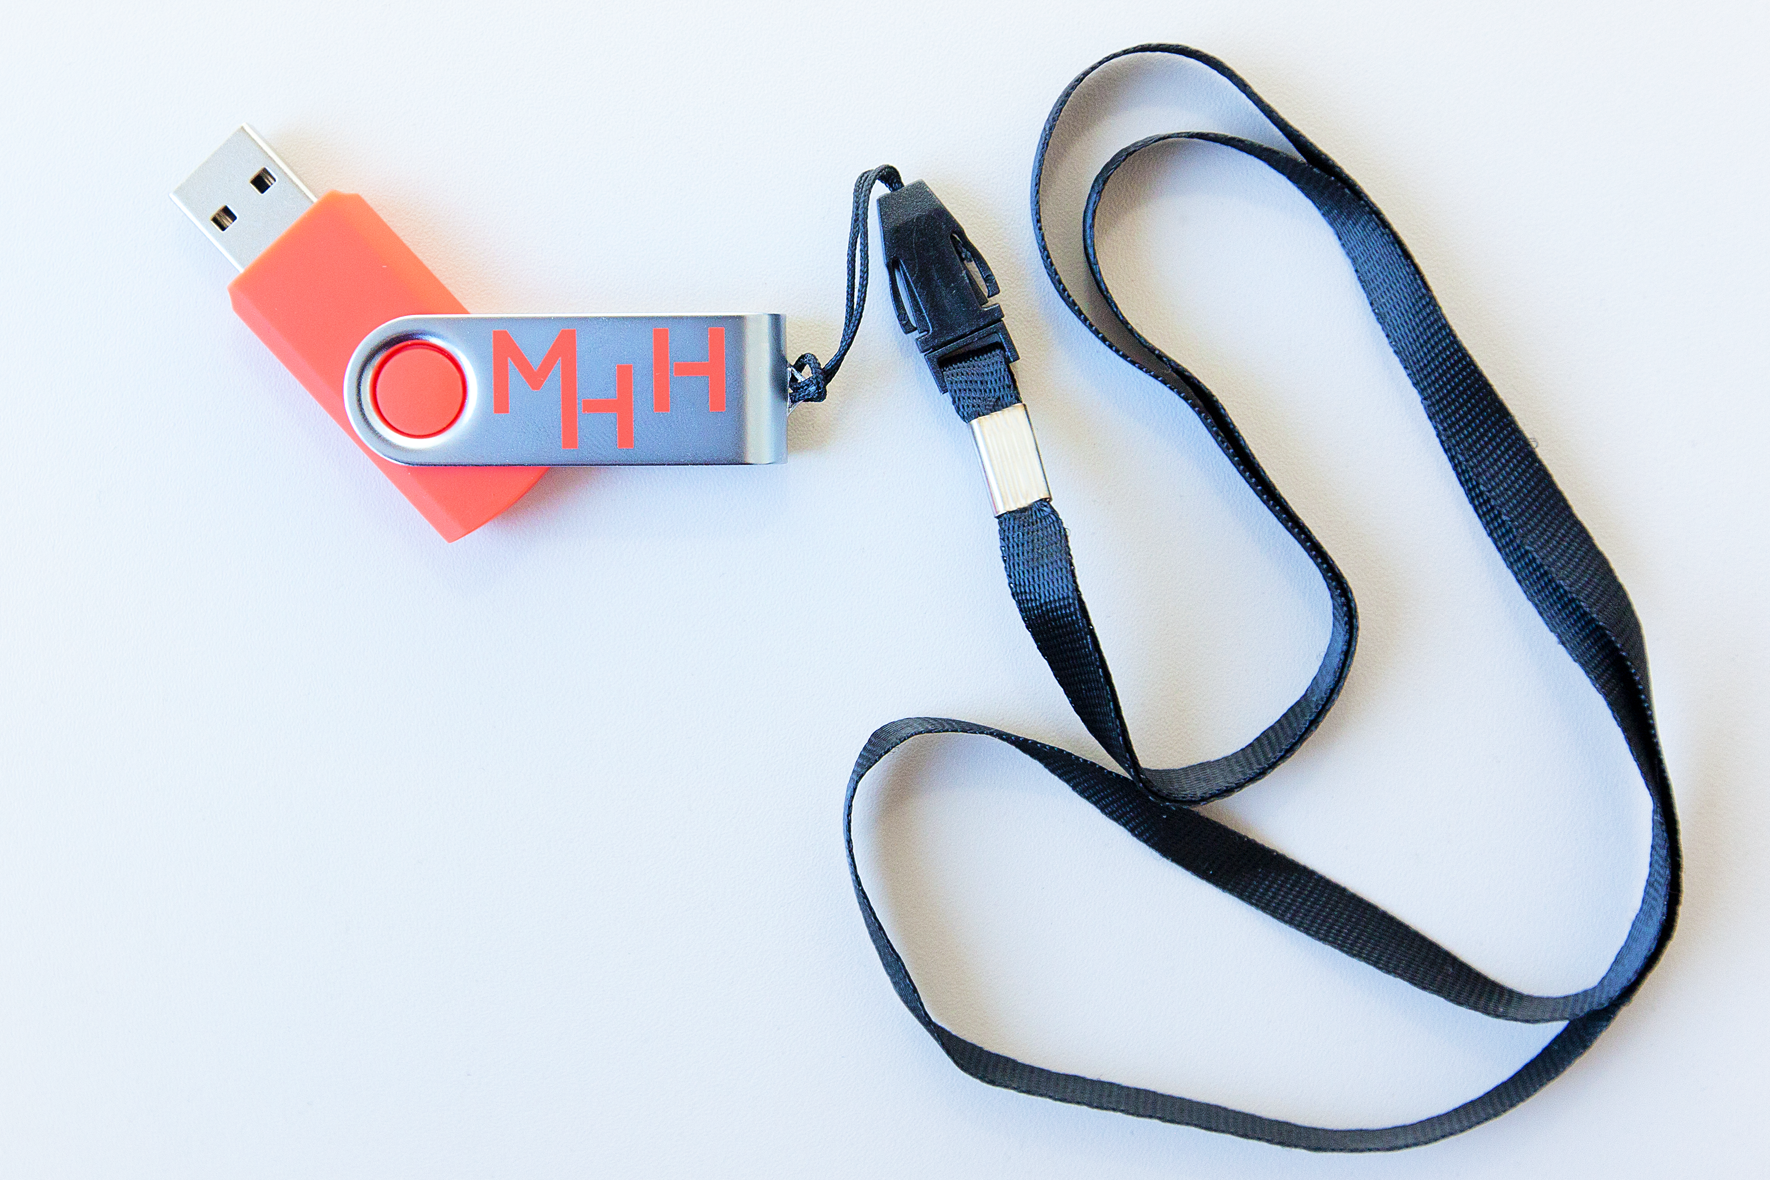 USB-Stick mit MHH-Logo